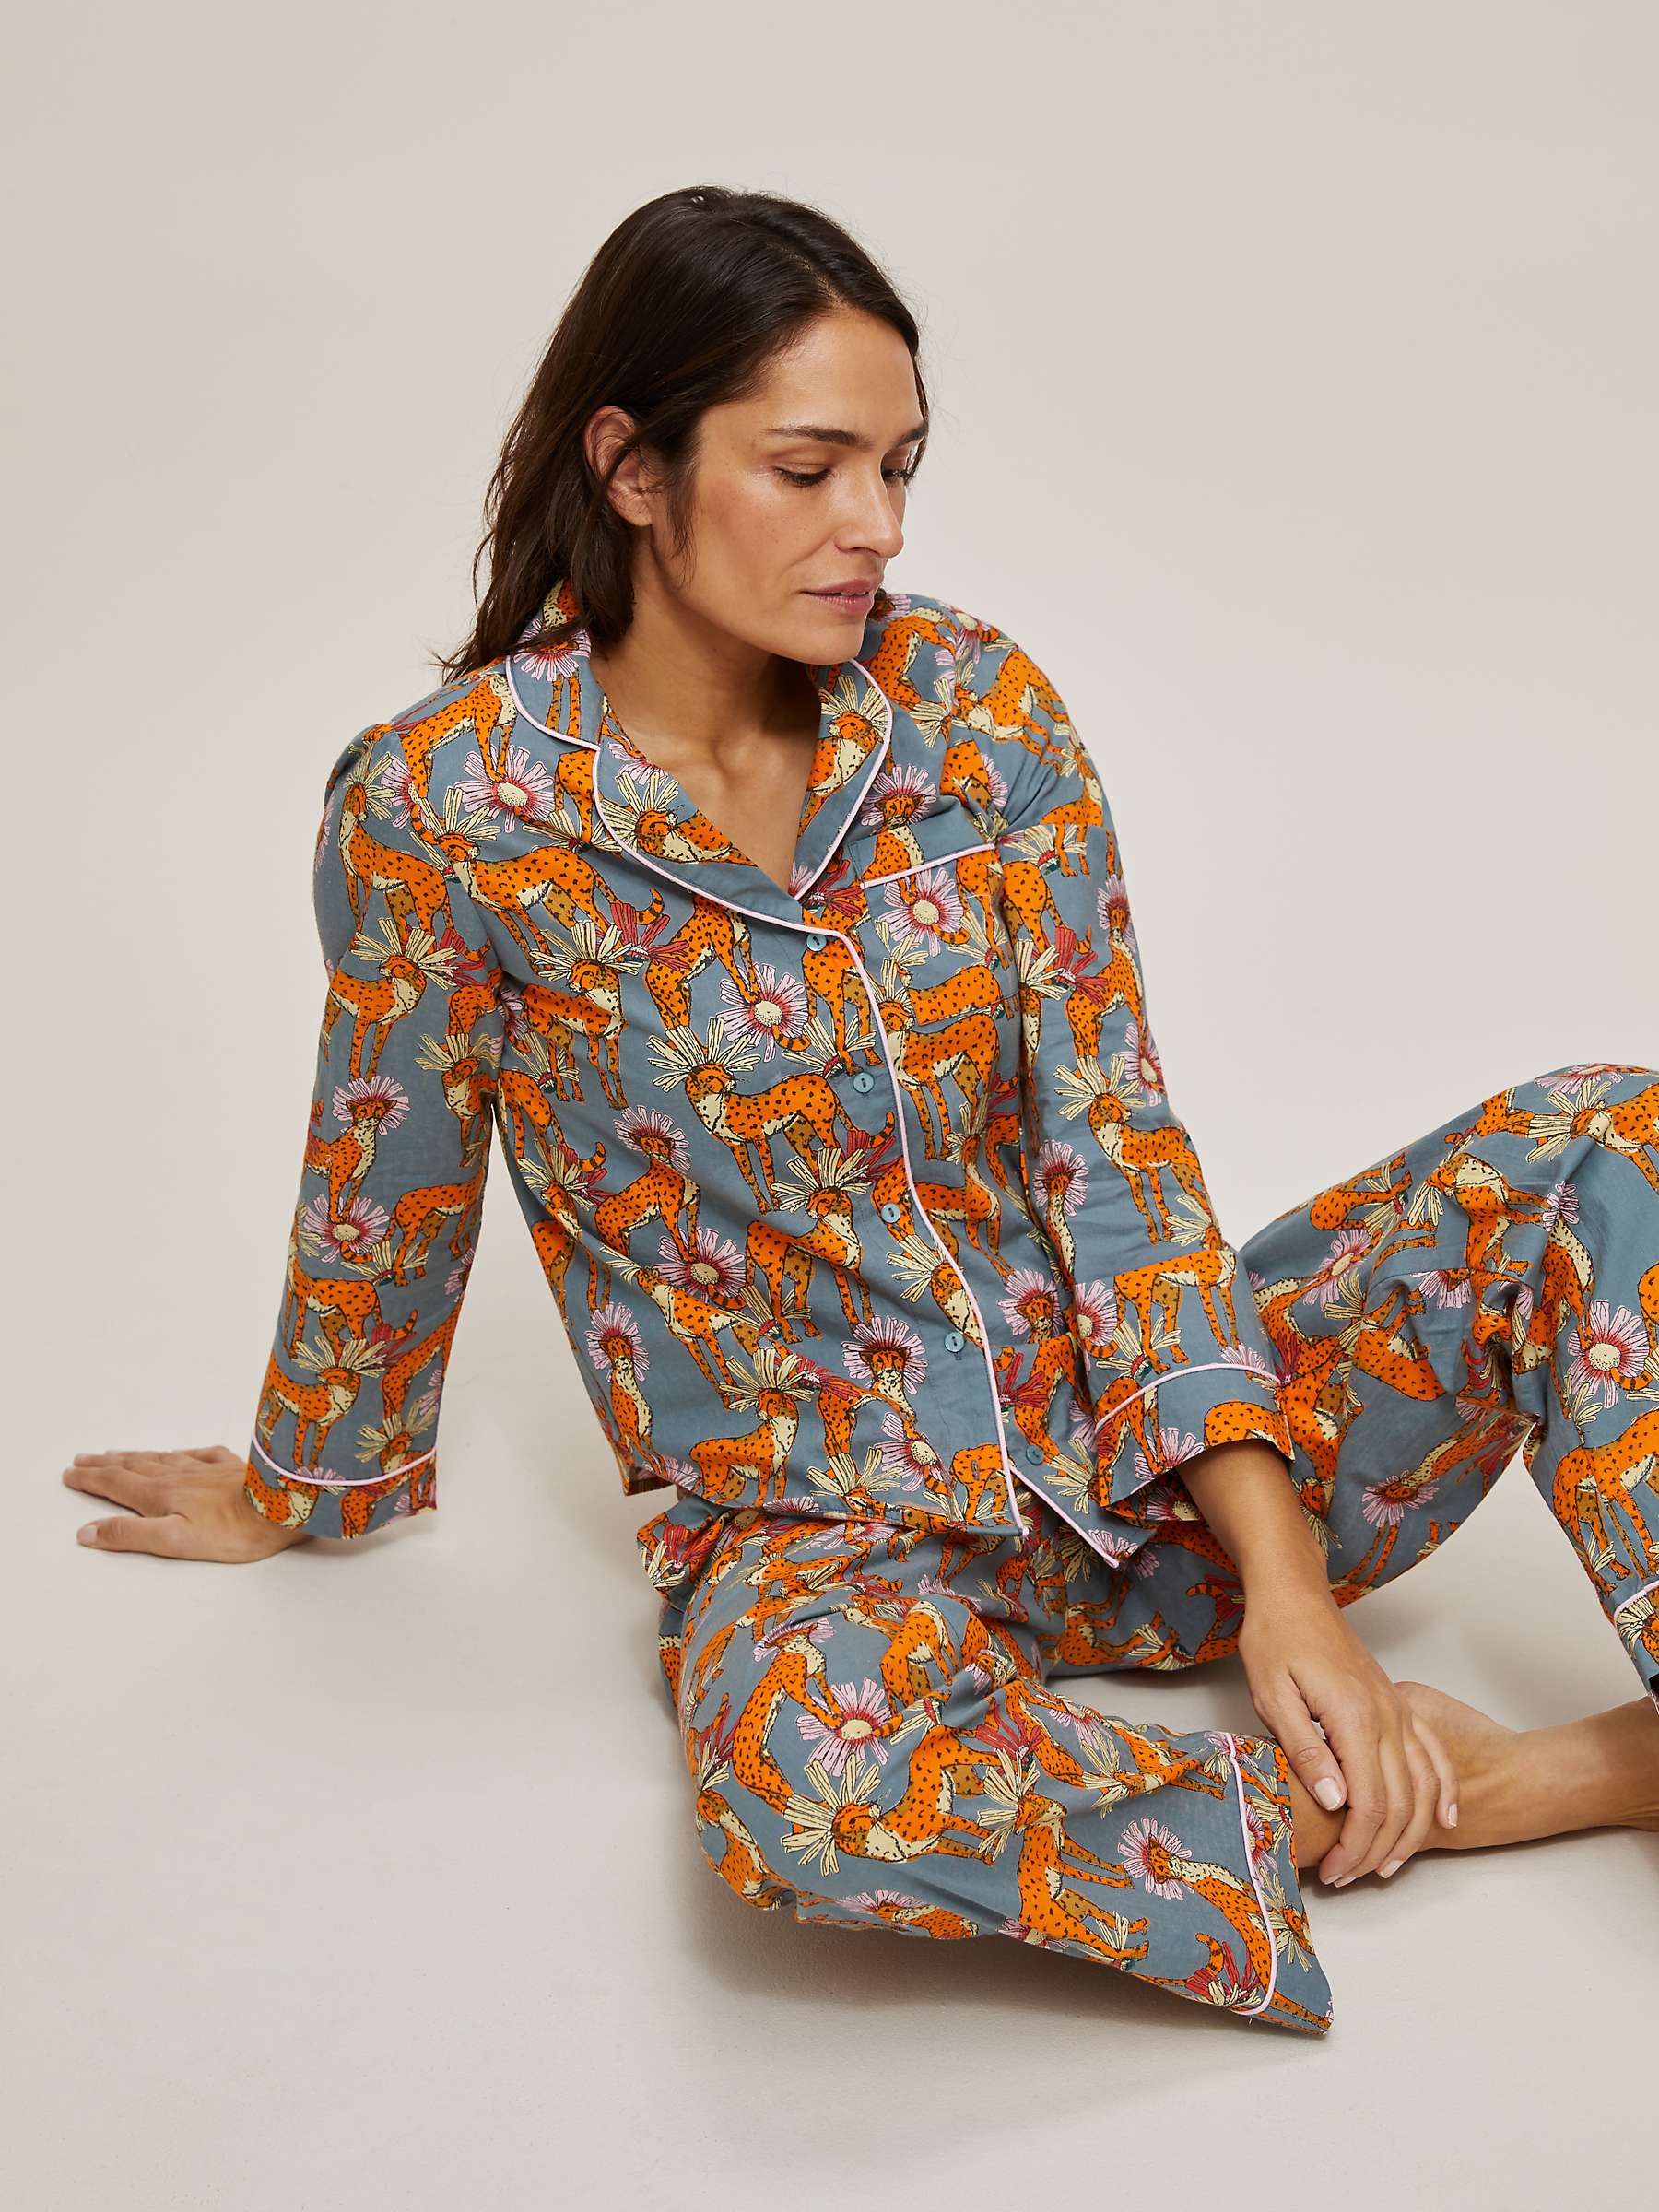 Buy Their Nibs Untamed Cheetah Cotton Pyjama Set, Grey Online at johnlewis.com